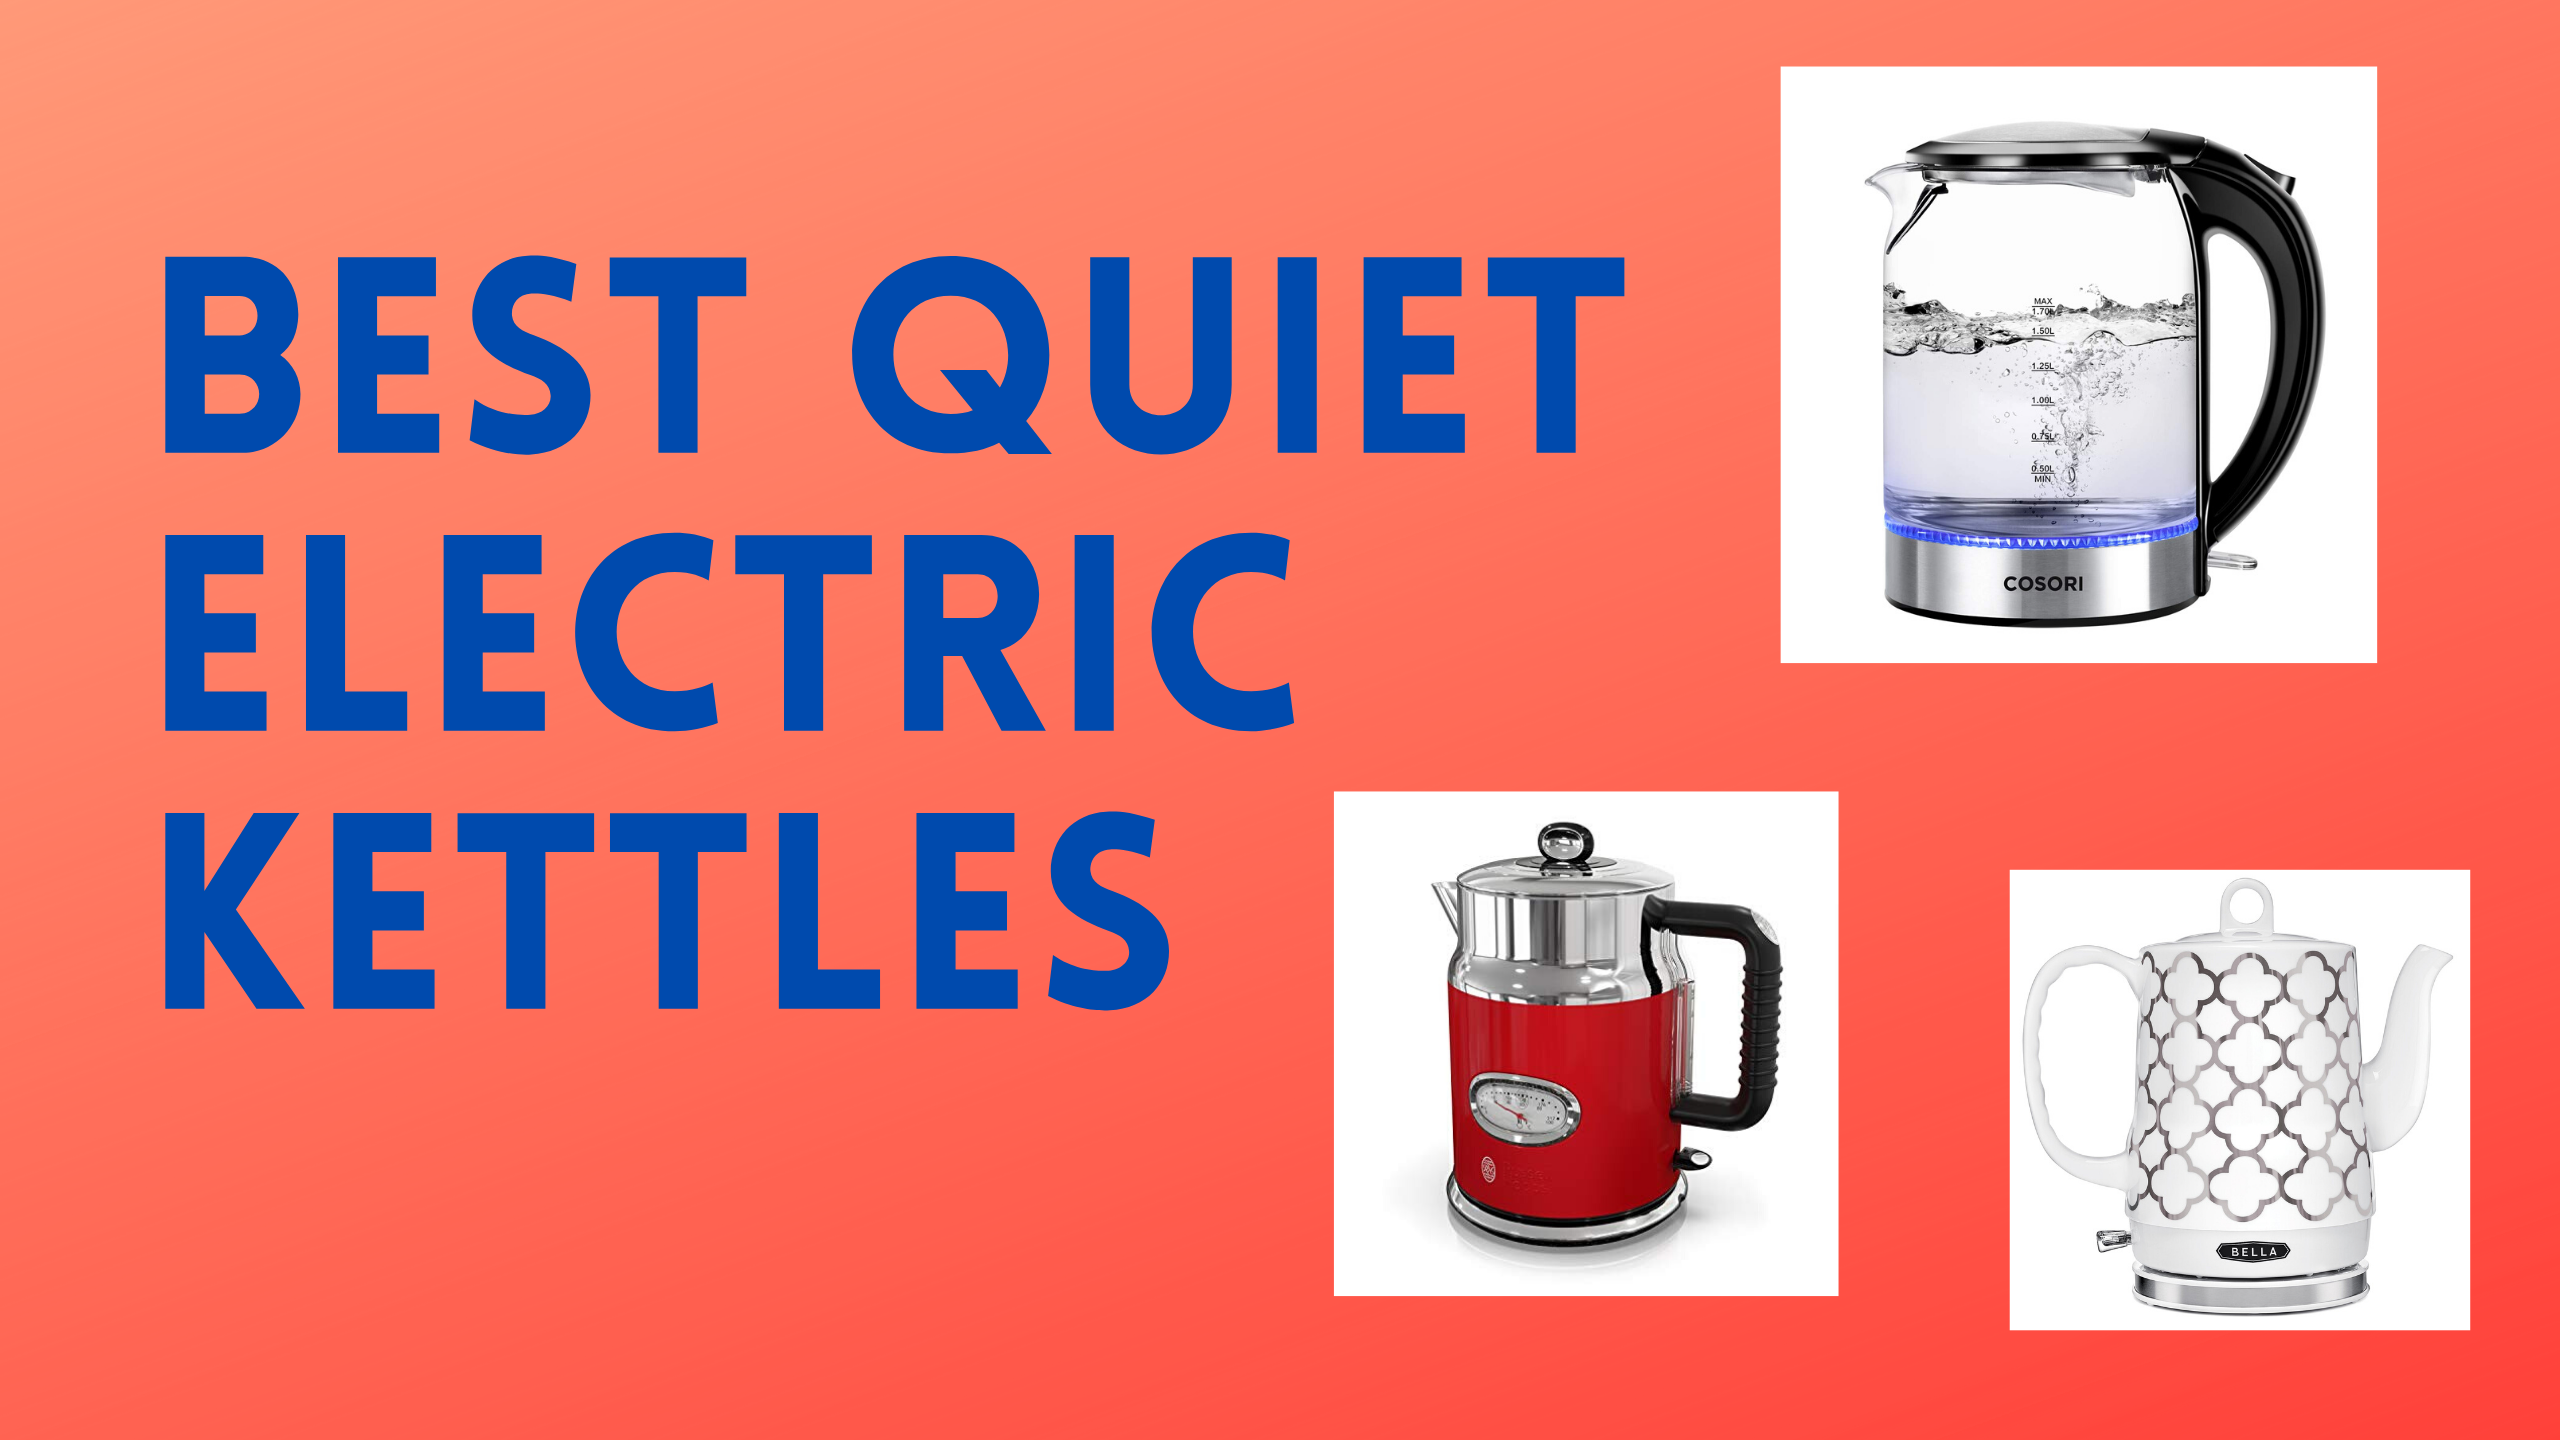 quietest electric kettle